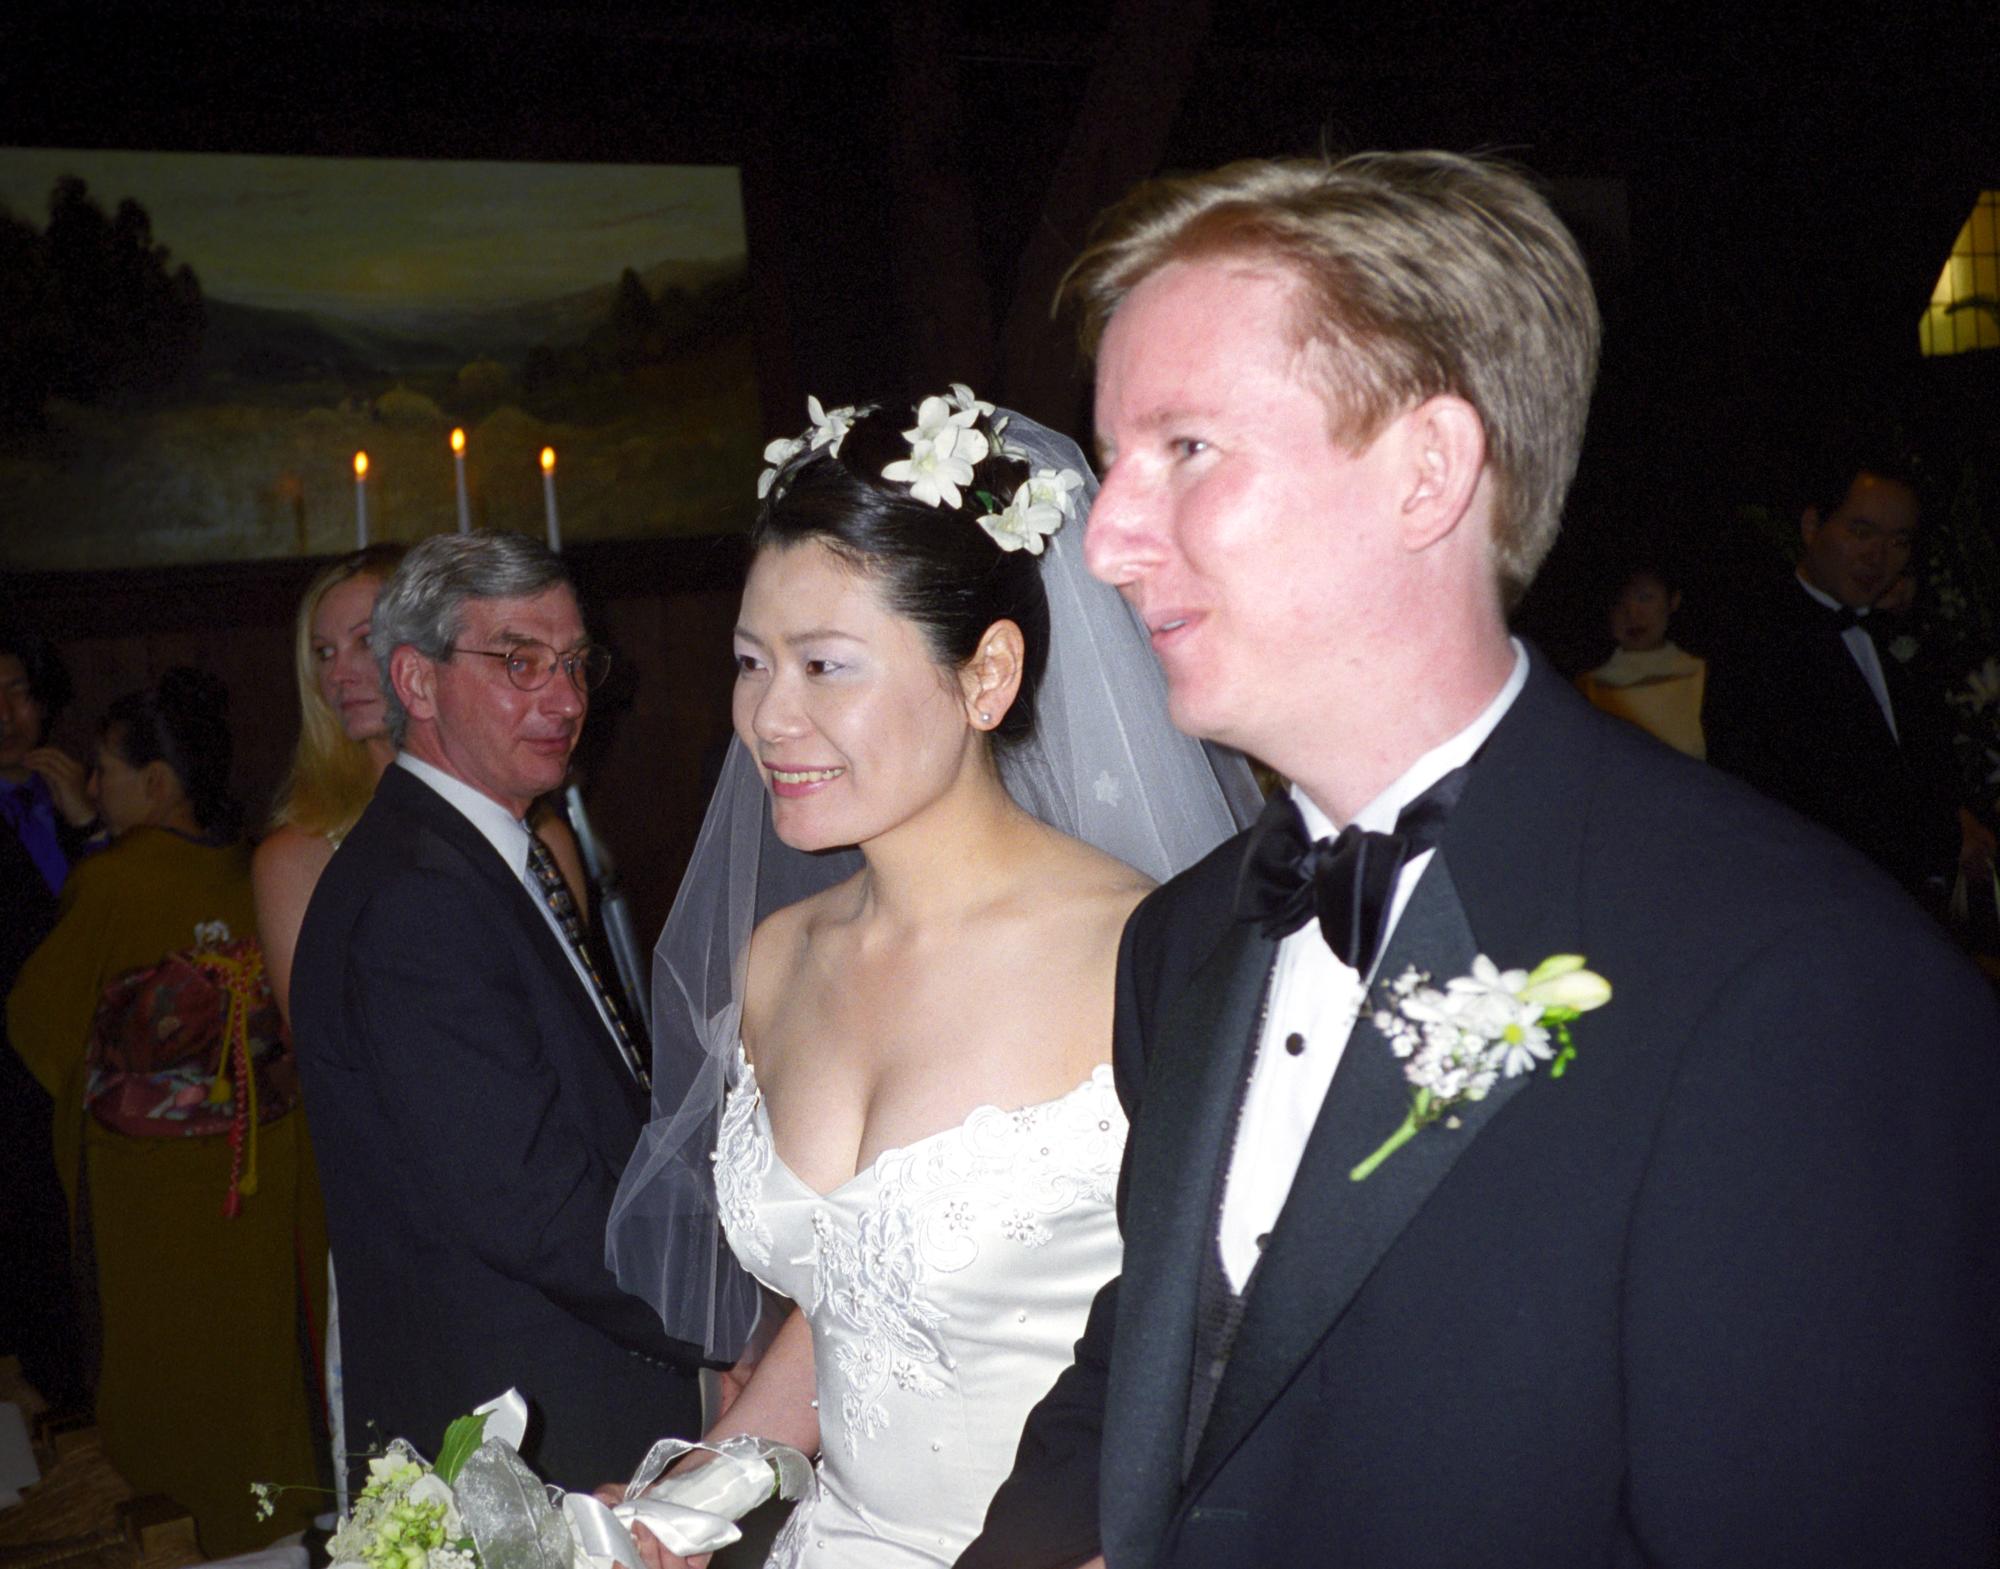 David & Ritsuko - Duimich Wedding #04